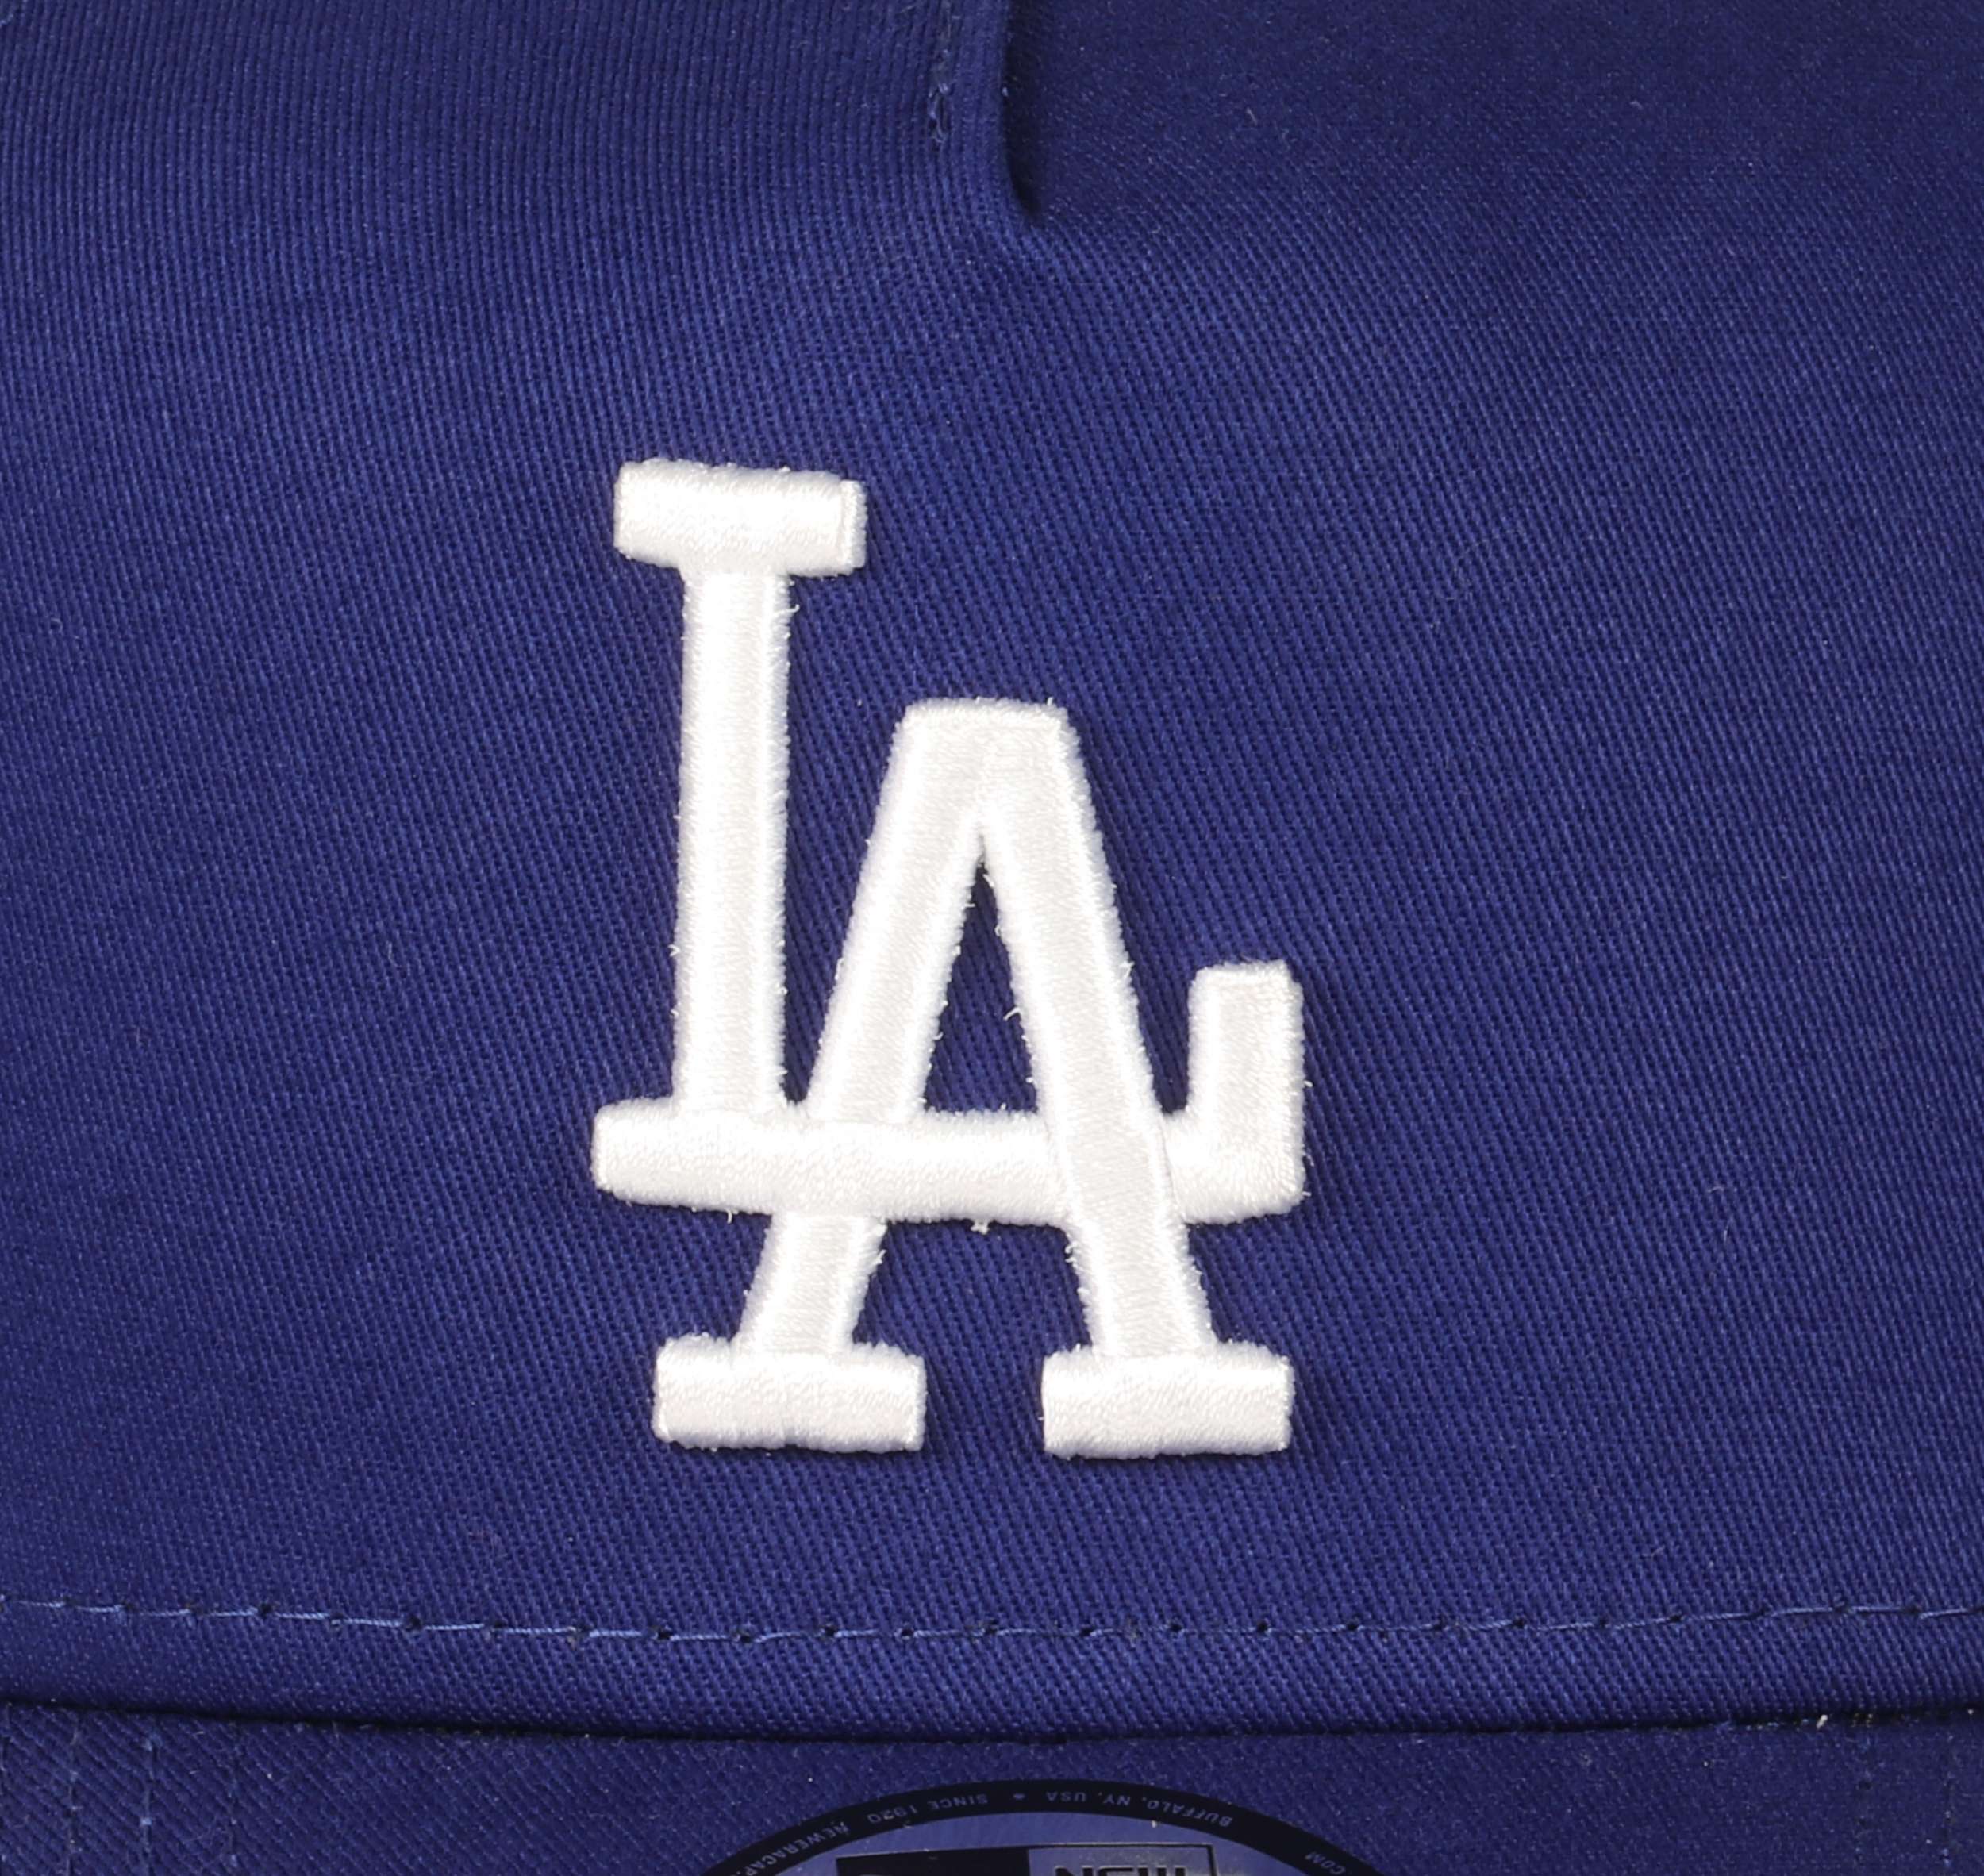 Los Angeles Dodgers MLB Dark Royal 9Forty A-Frame Snapback Cap New Era